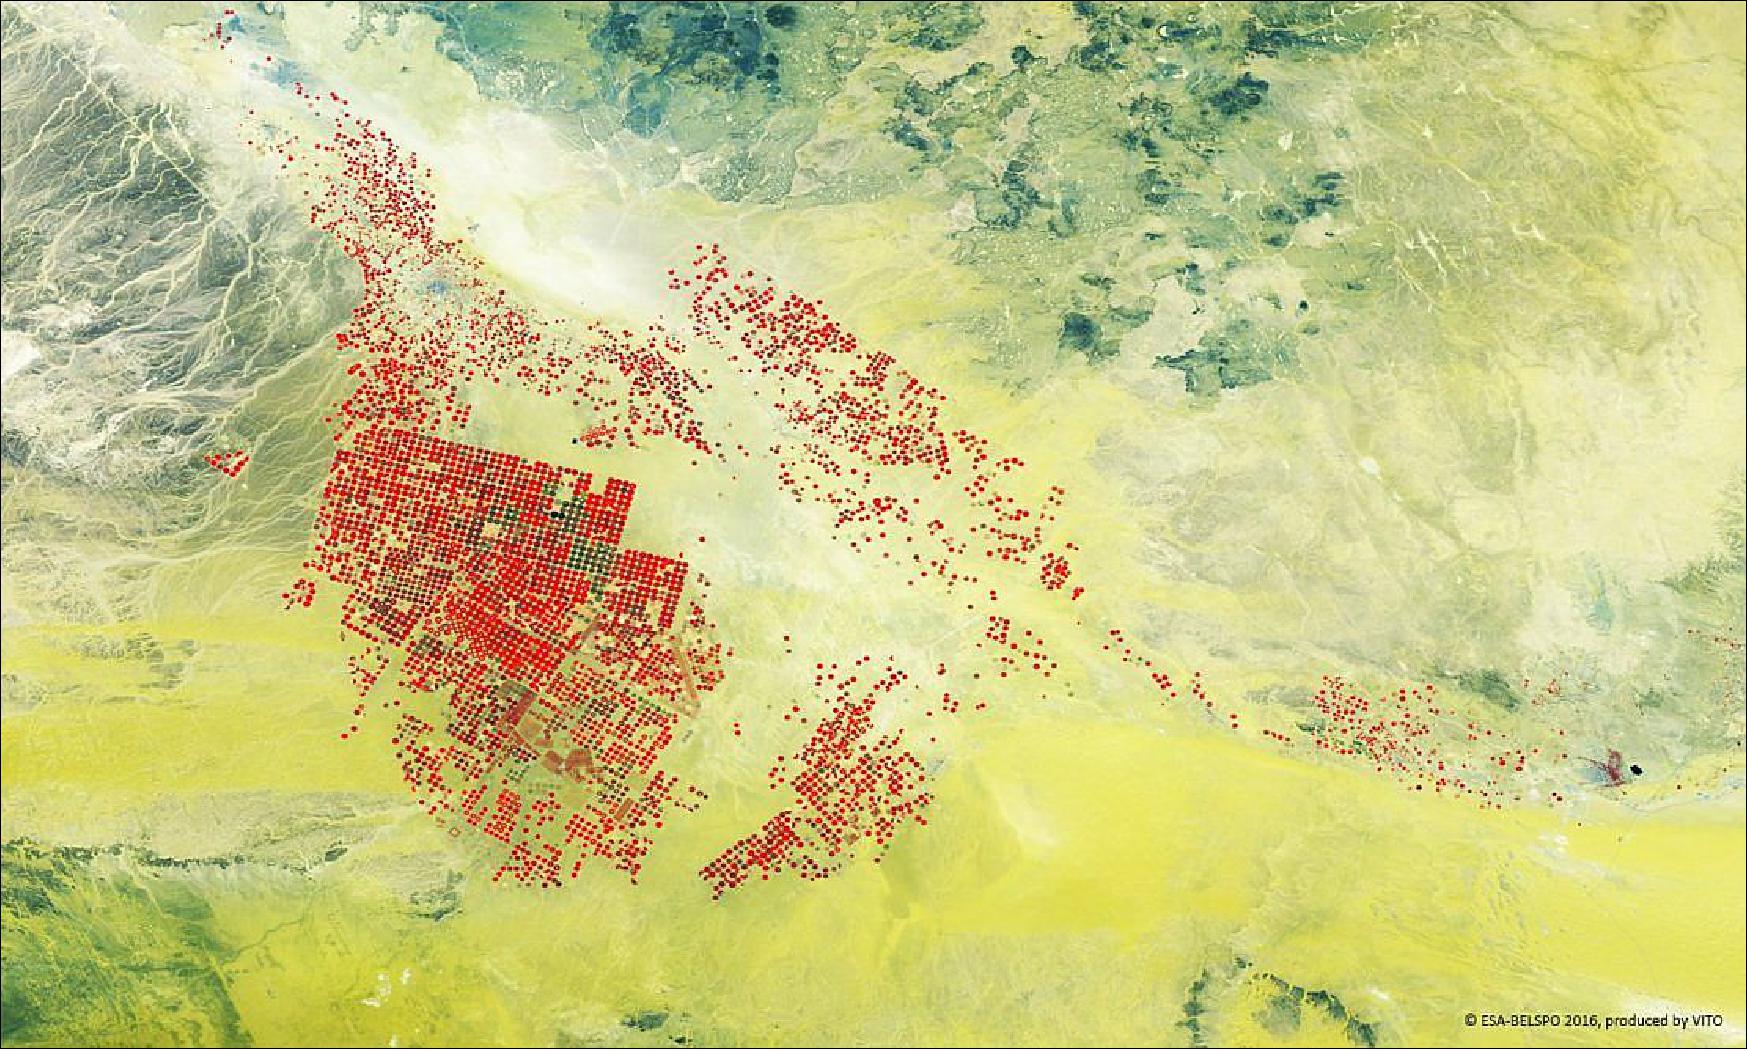 Figure 43: False-color crops bloom in the Saudi Arabian desert, imaged by ESA's PROBA-V minisatellite (image credit: ESA/BELSPO, provided by VITO)